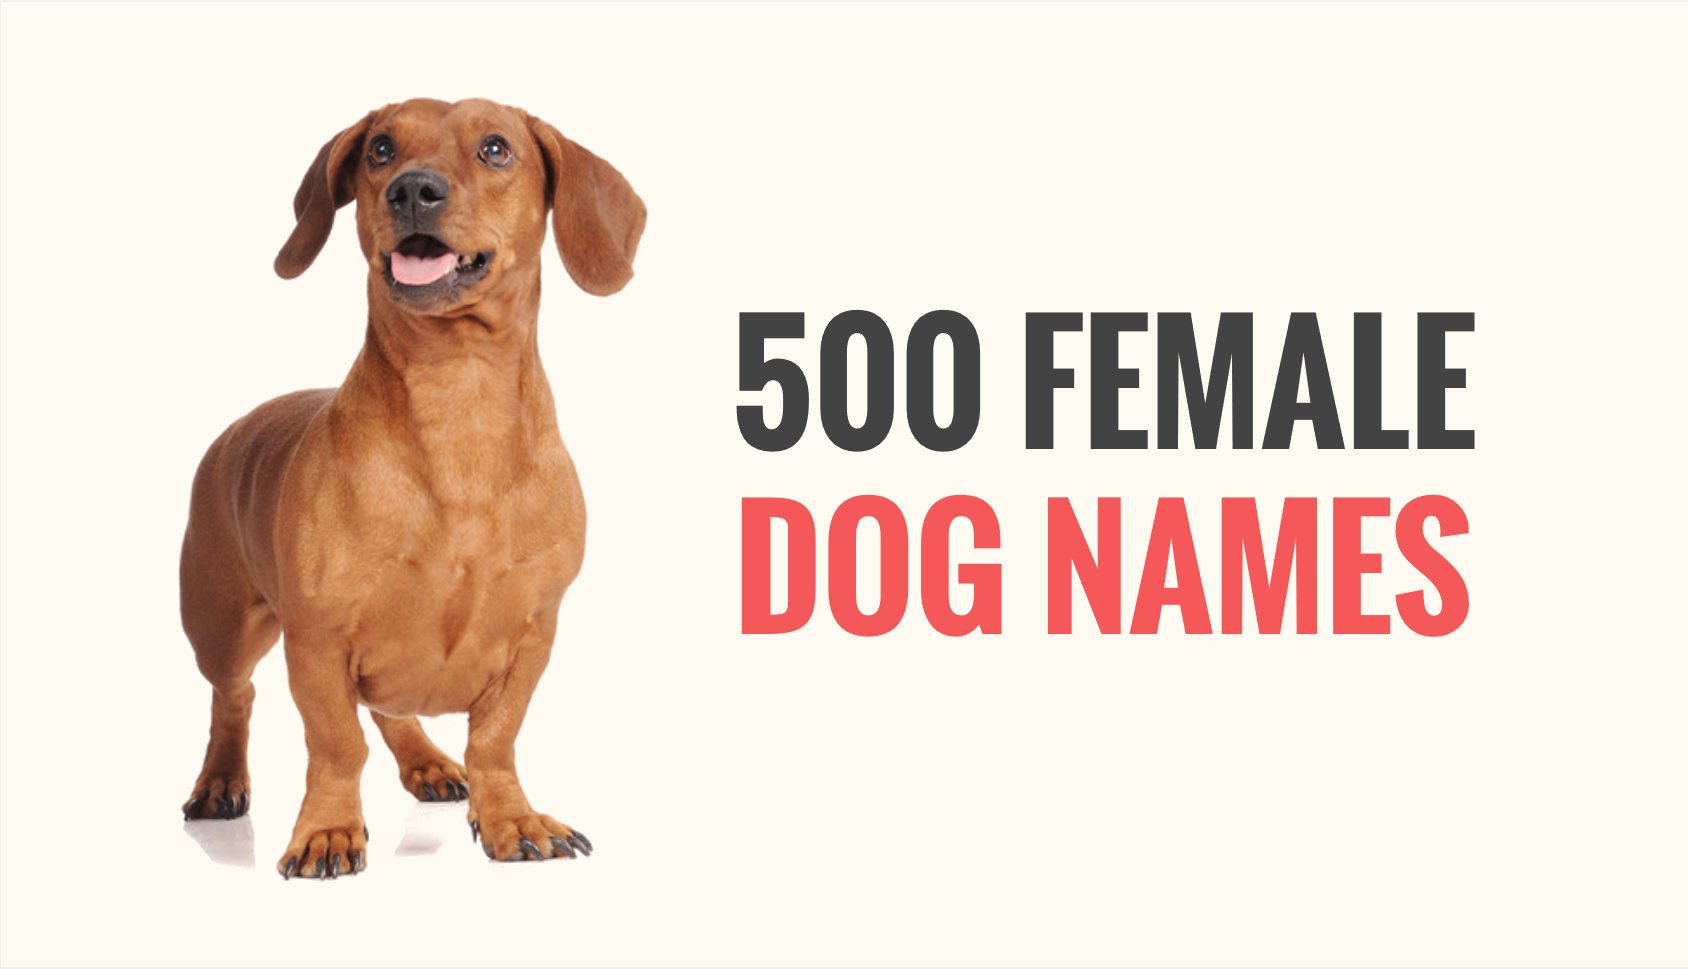 500 Popular Female Dog Names Puppy Leaks